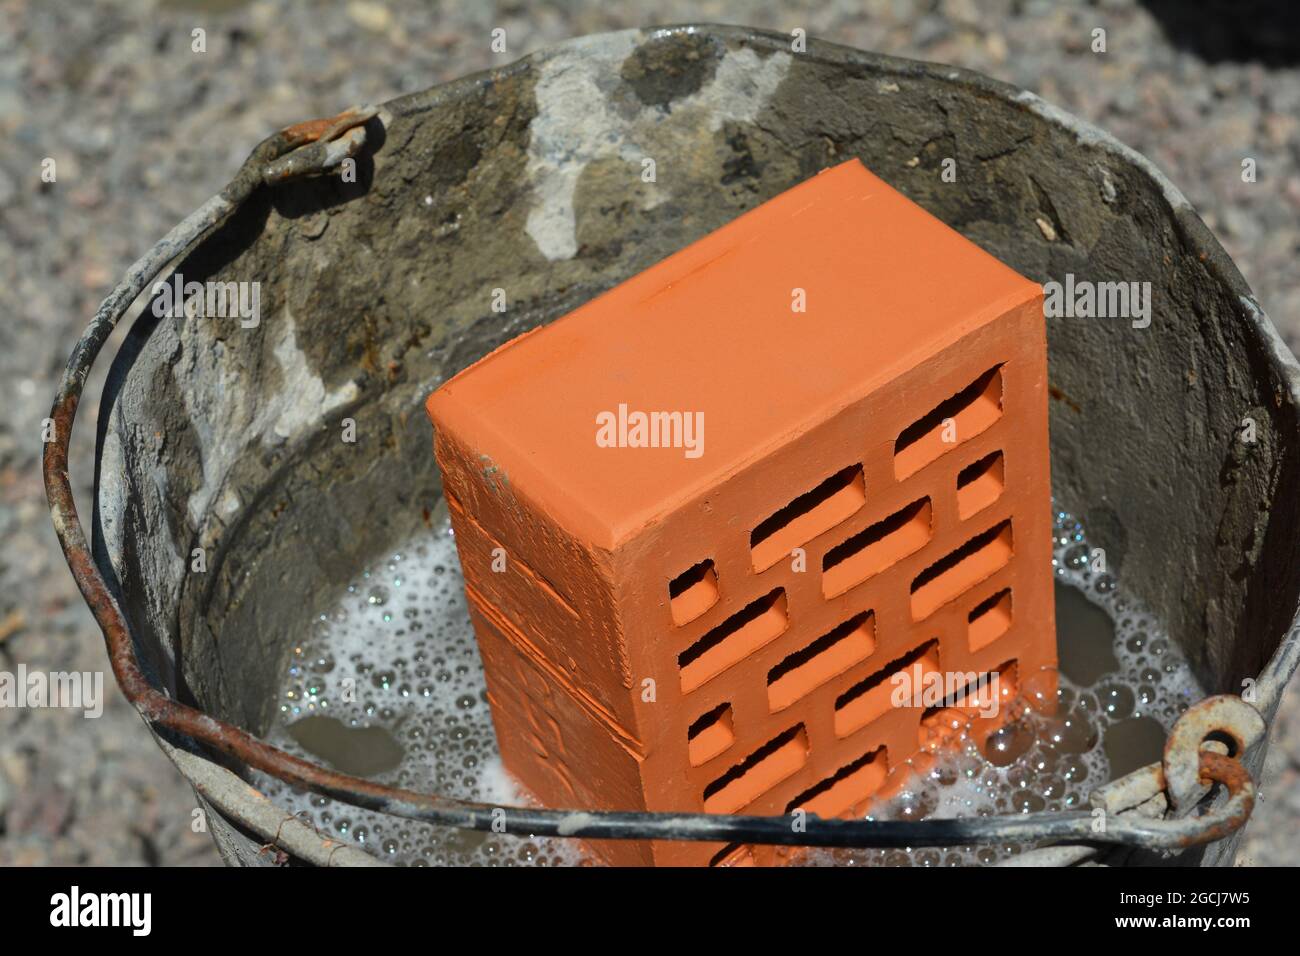 Wetting of bricks, soaking bricks in water before laying the bricks for good mortar strength. Stock Photo